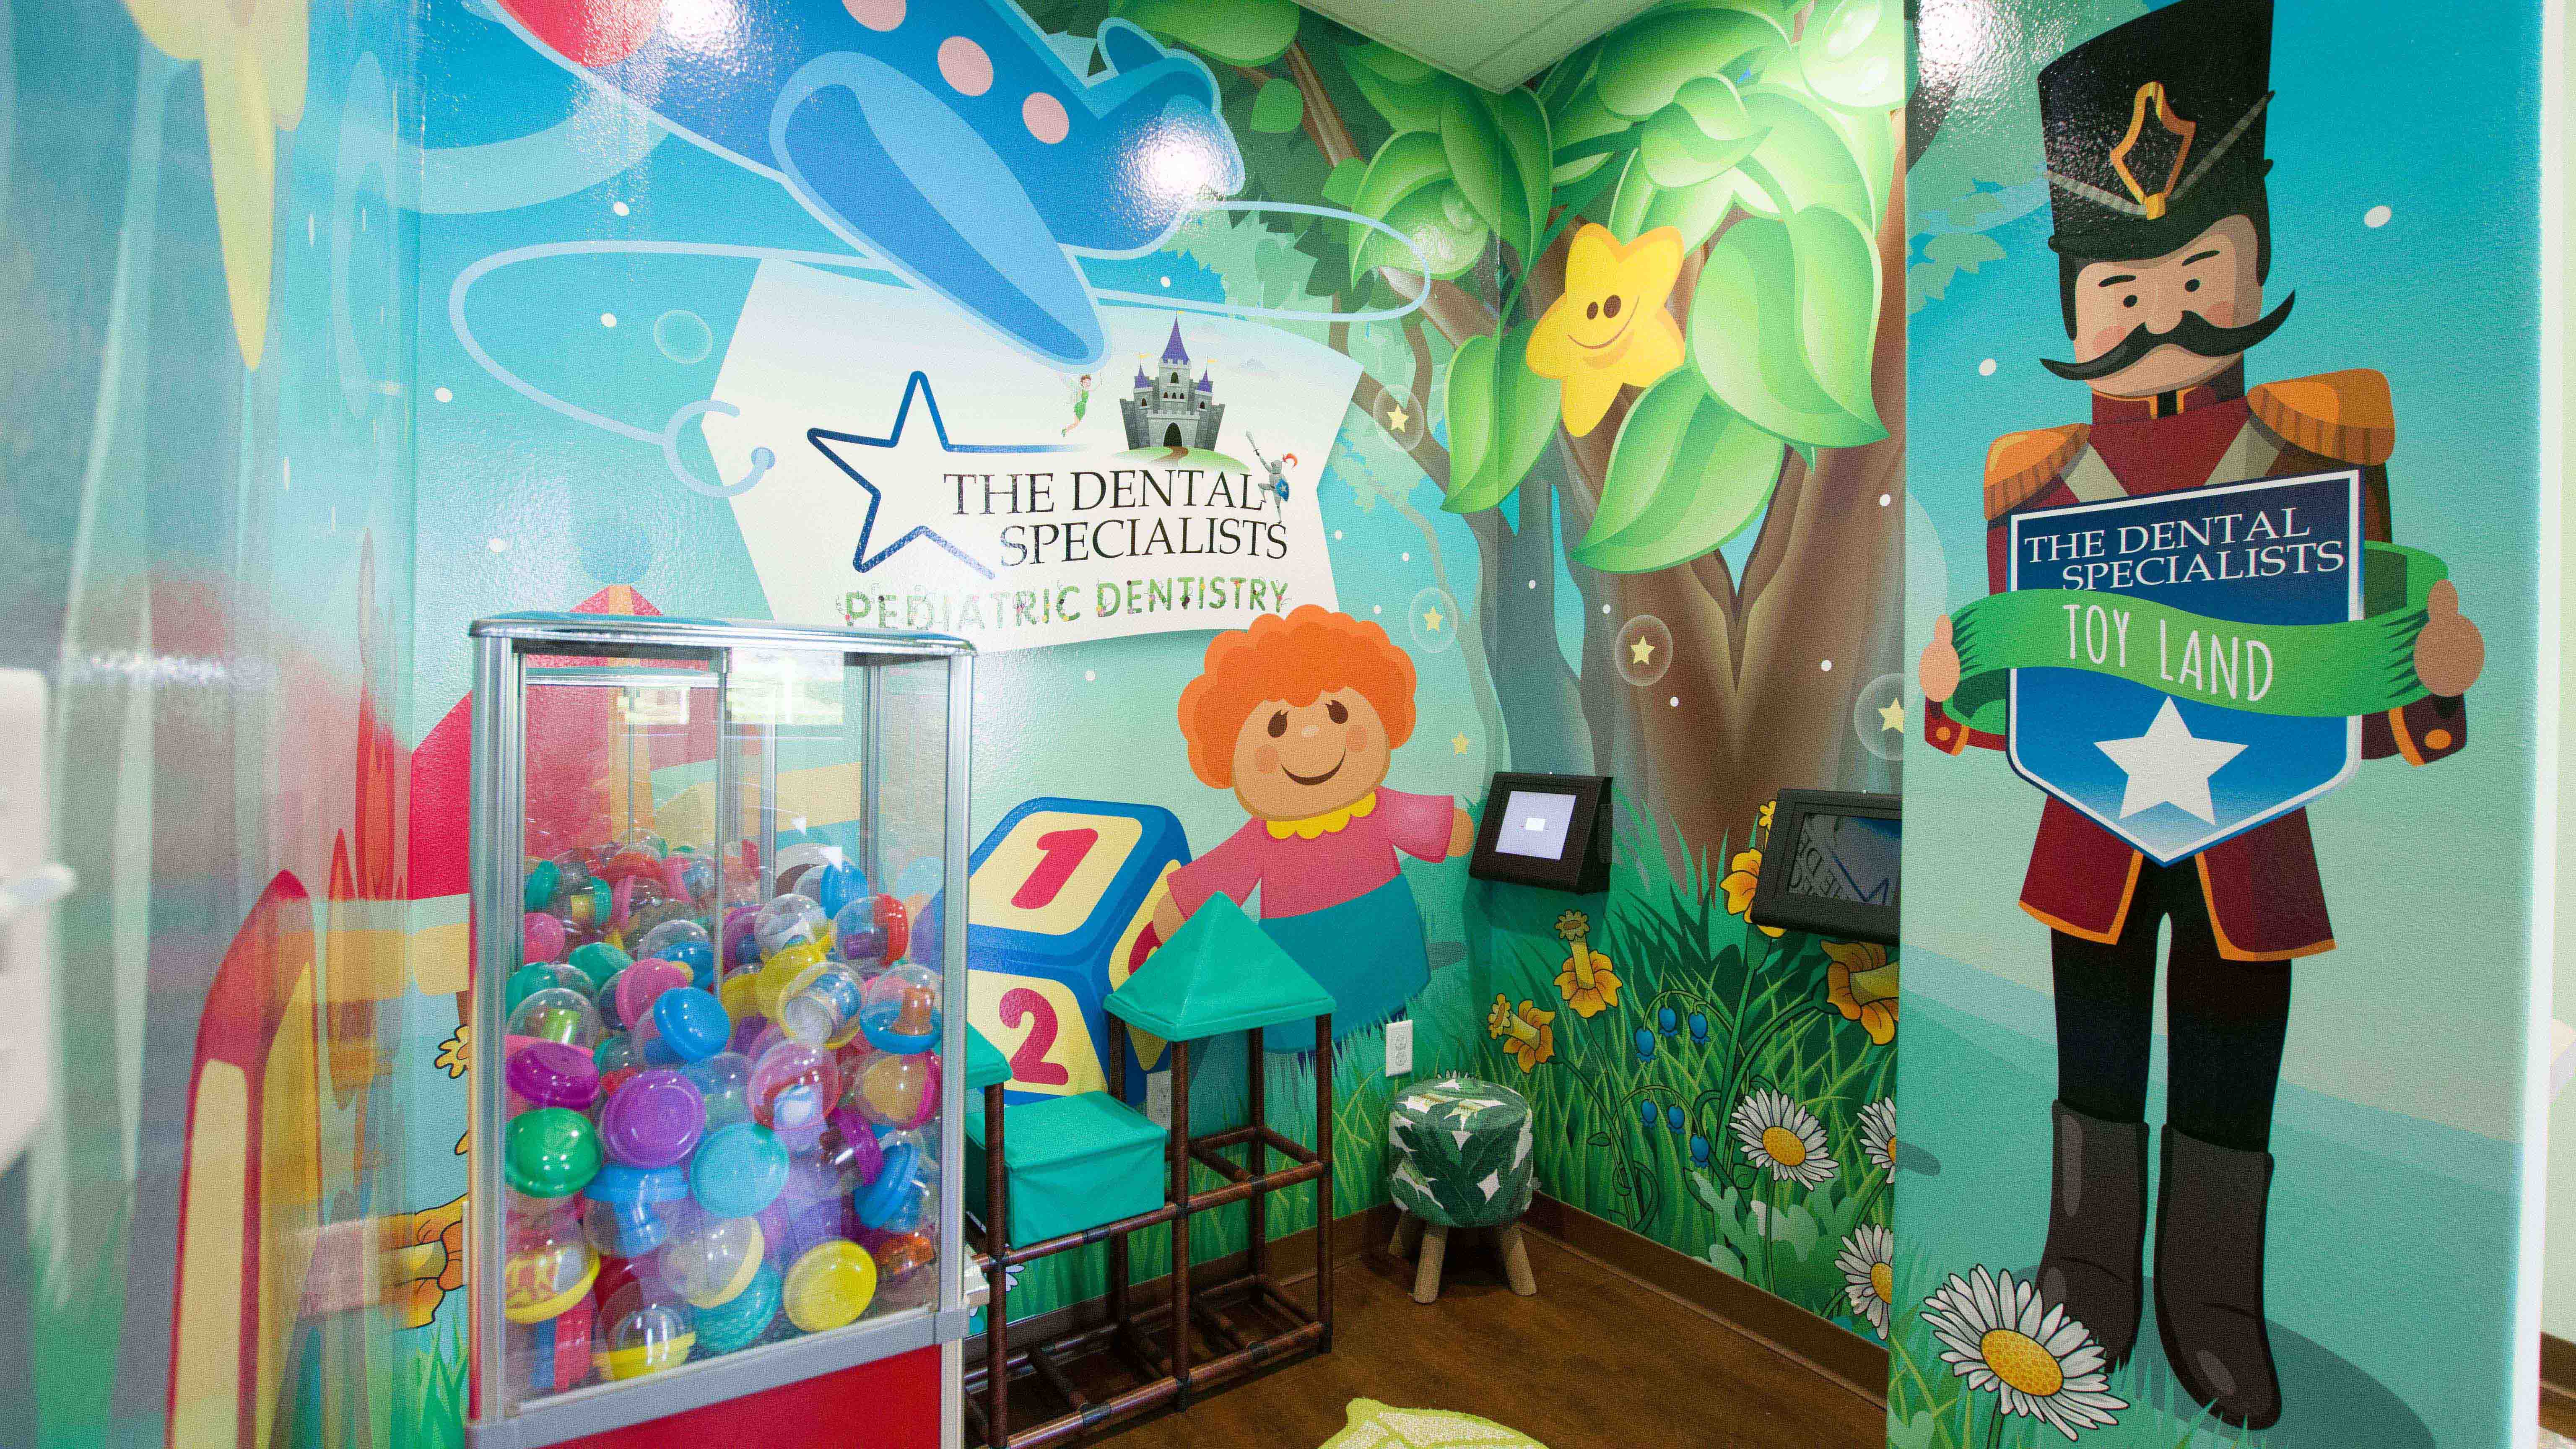 Hallway to pediatric dental treatment rooms